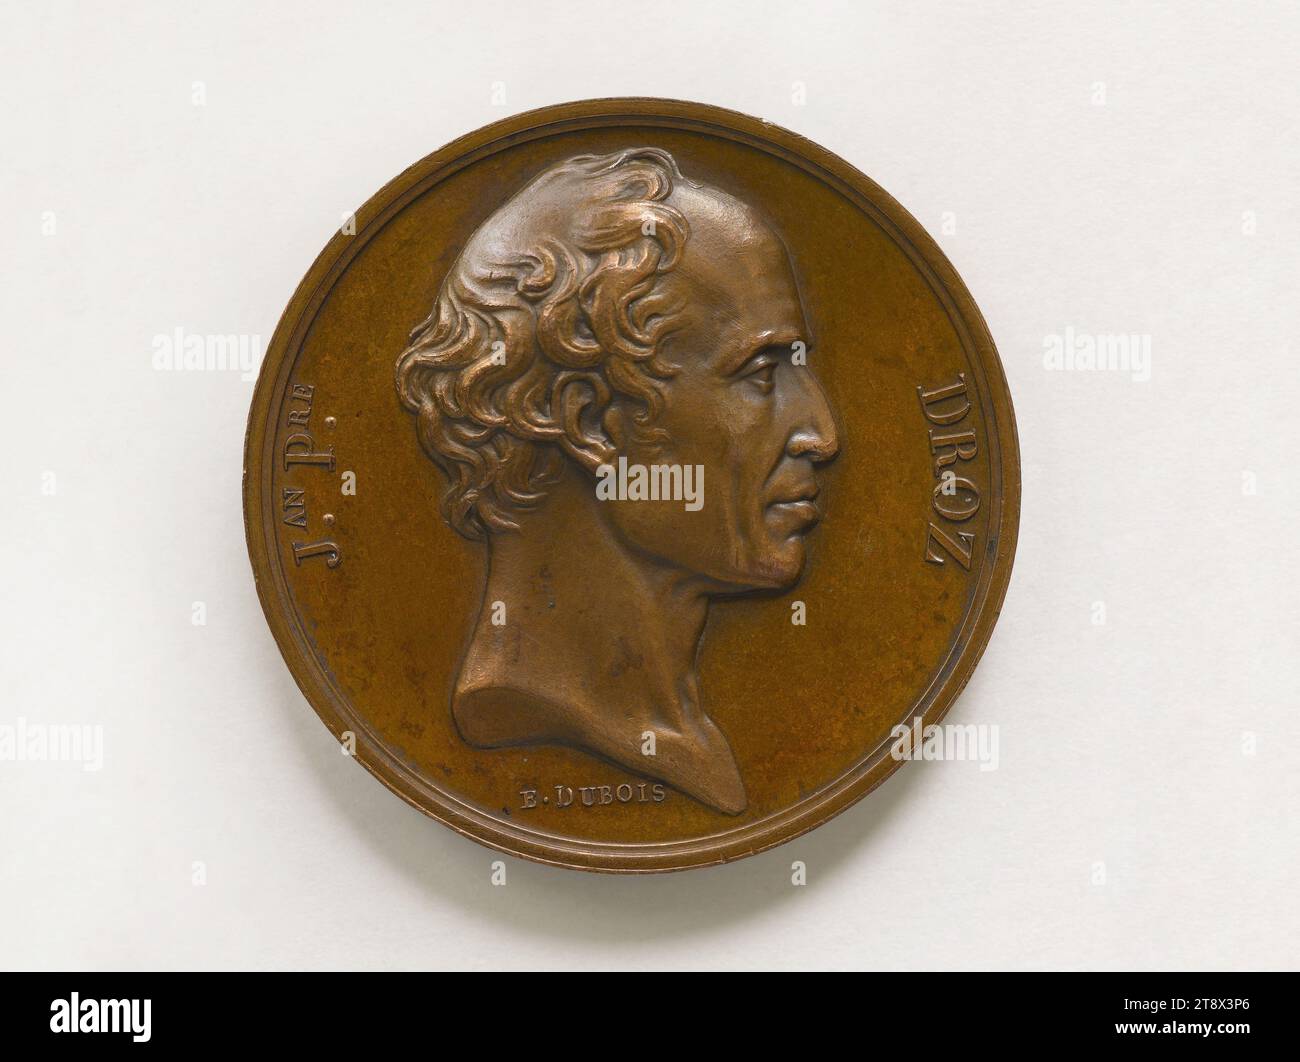 Jean-Pierre Droz (1740-1823), engraver, after 1823, Dubois, Joseph Eugène, Engraver in medals, Array, Numismatics, Medal, Dimensions - Work: Diameter: 3.5 cm, Weight (type dimension): 19.77 g Stock Photo